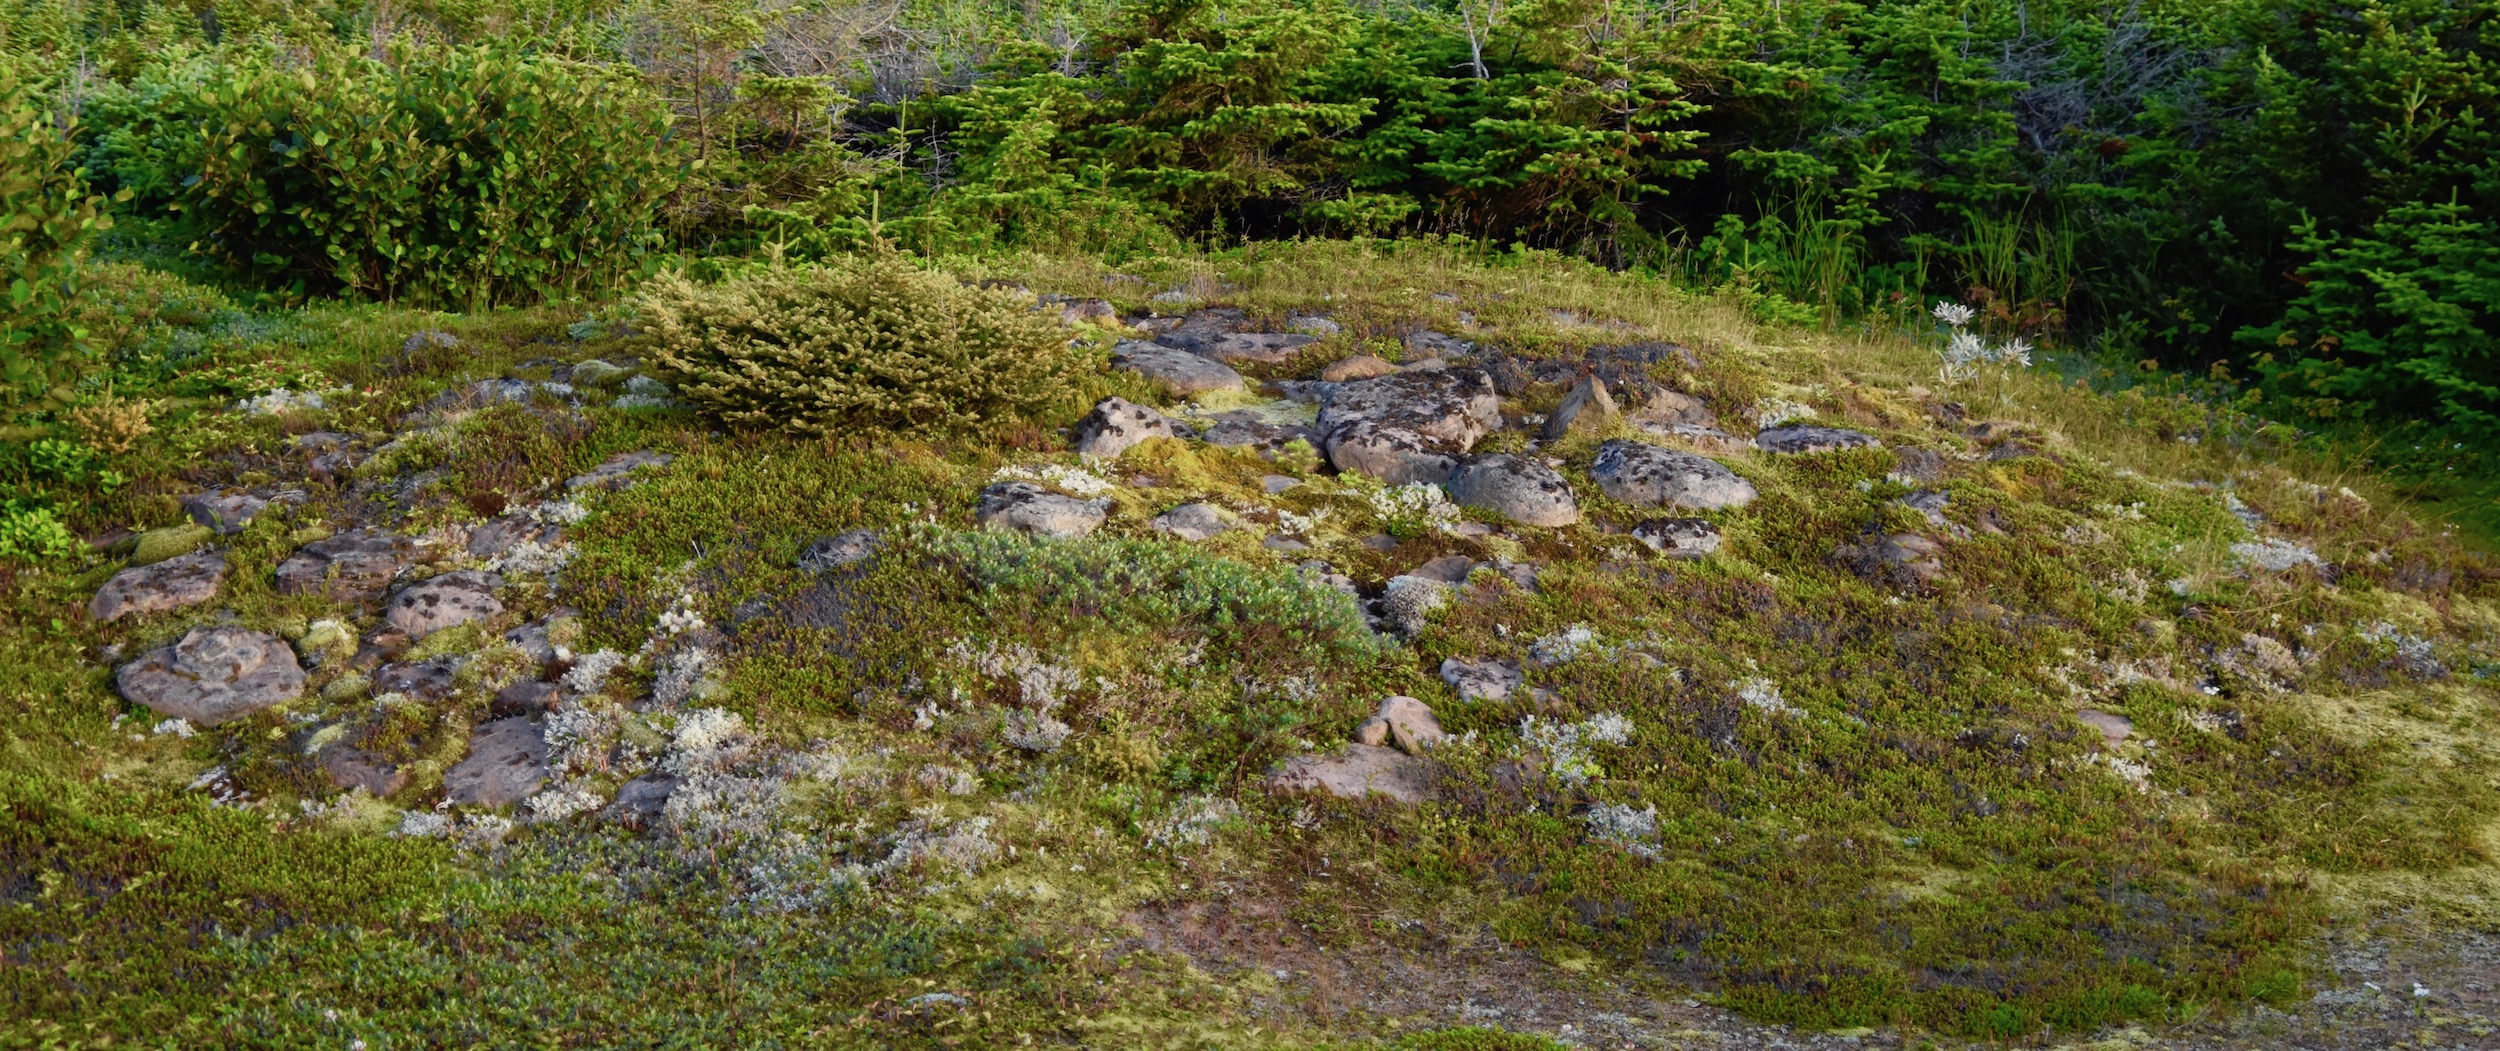 North America's Oldest Grave, Labrador